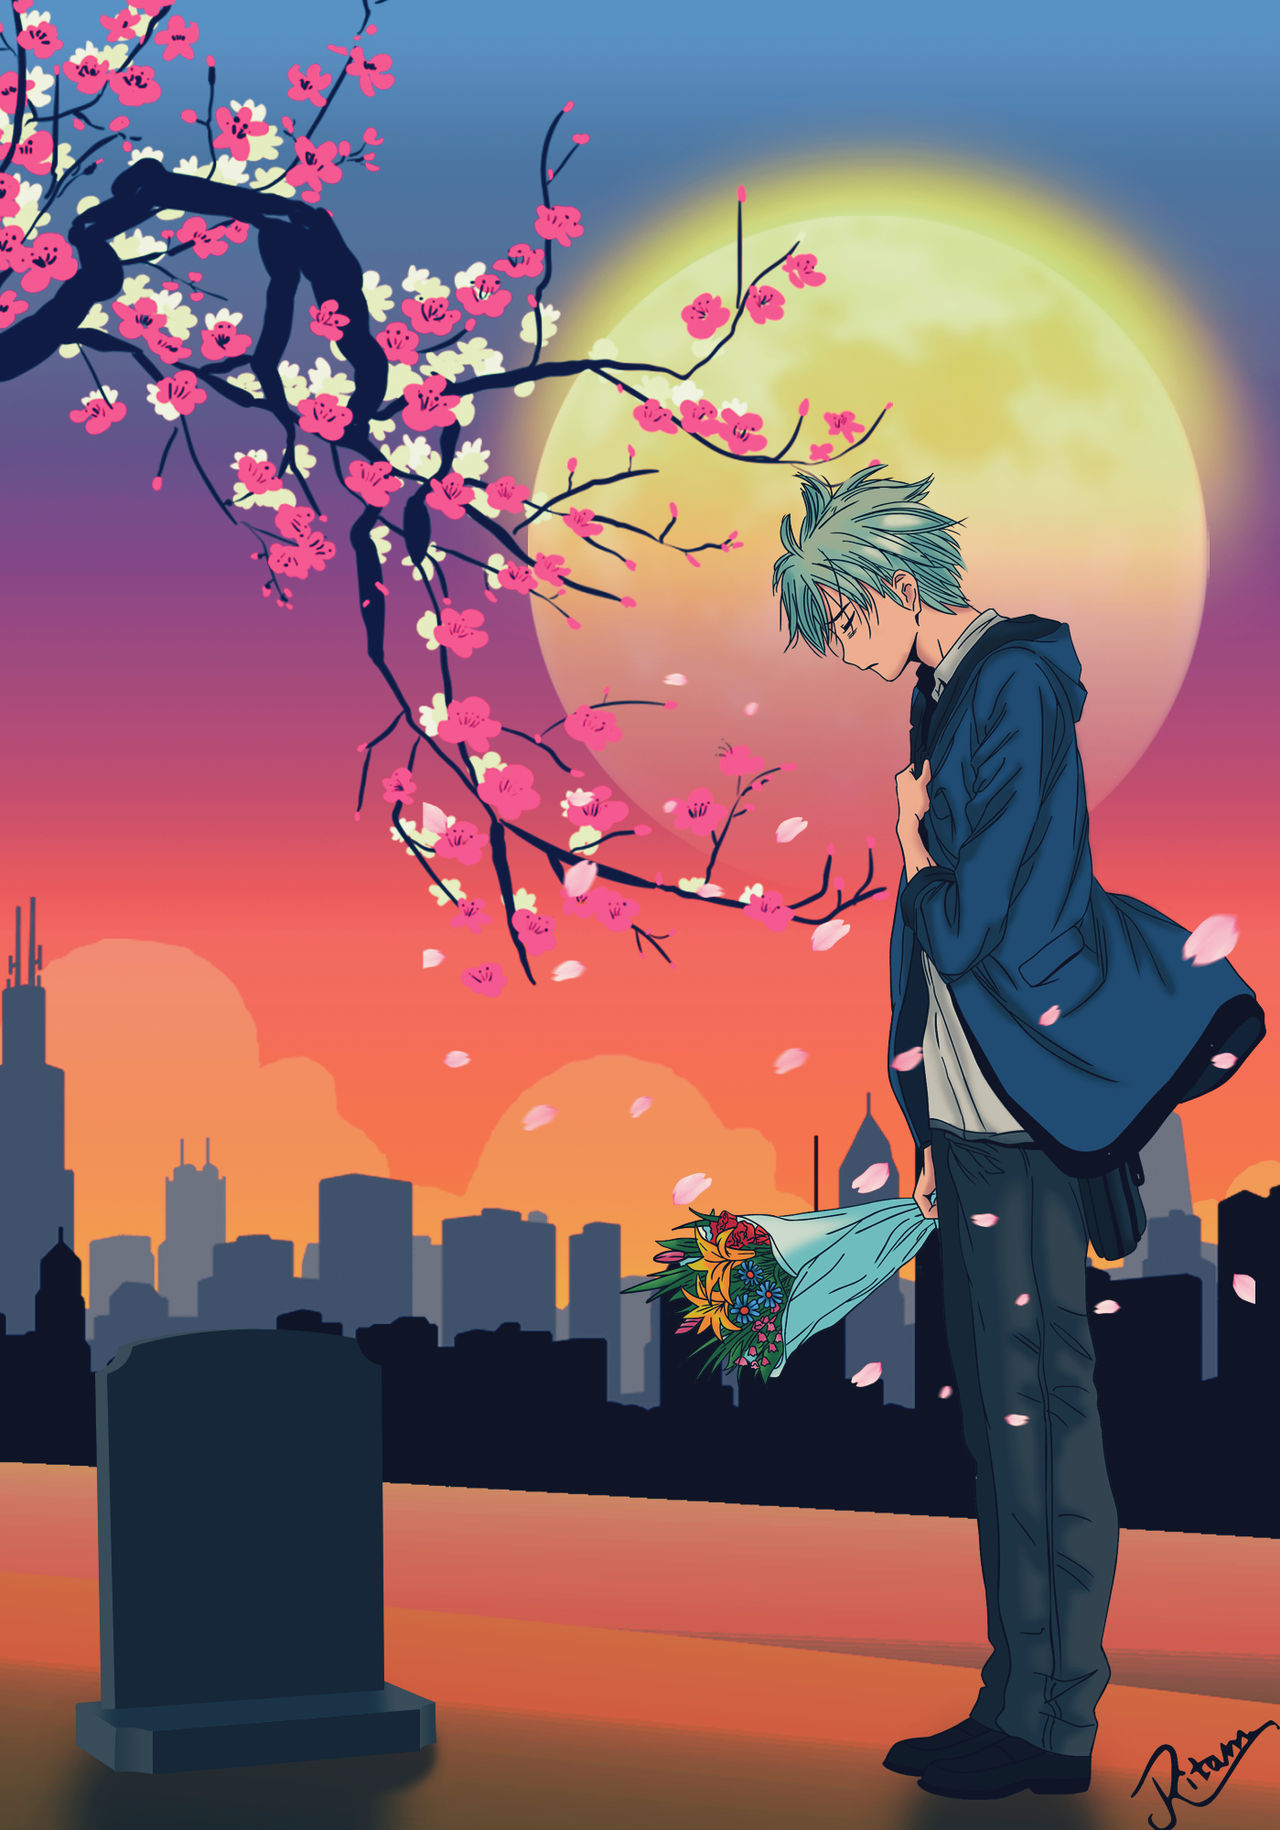 Sad anime boy by xXlonewolfguyXx on DeviantArt